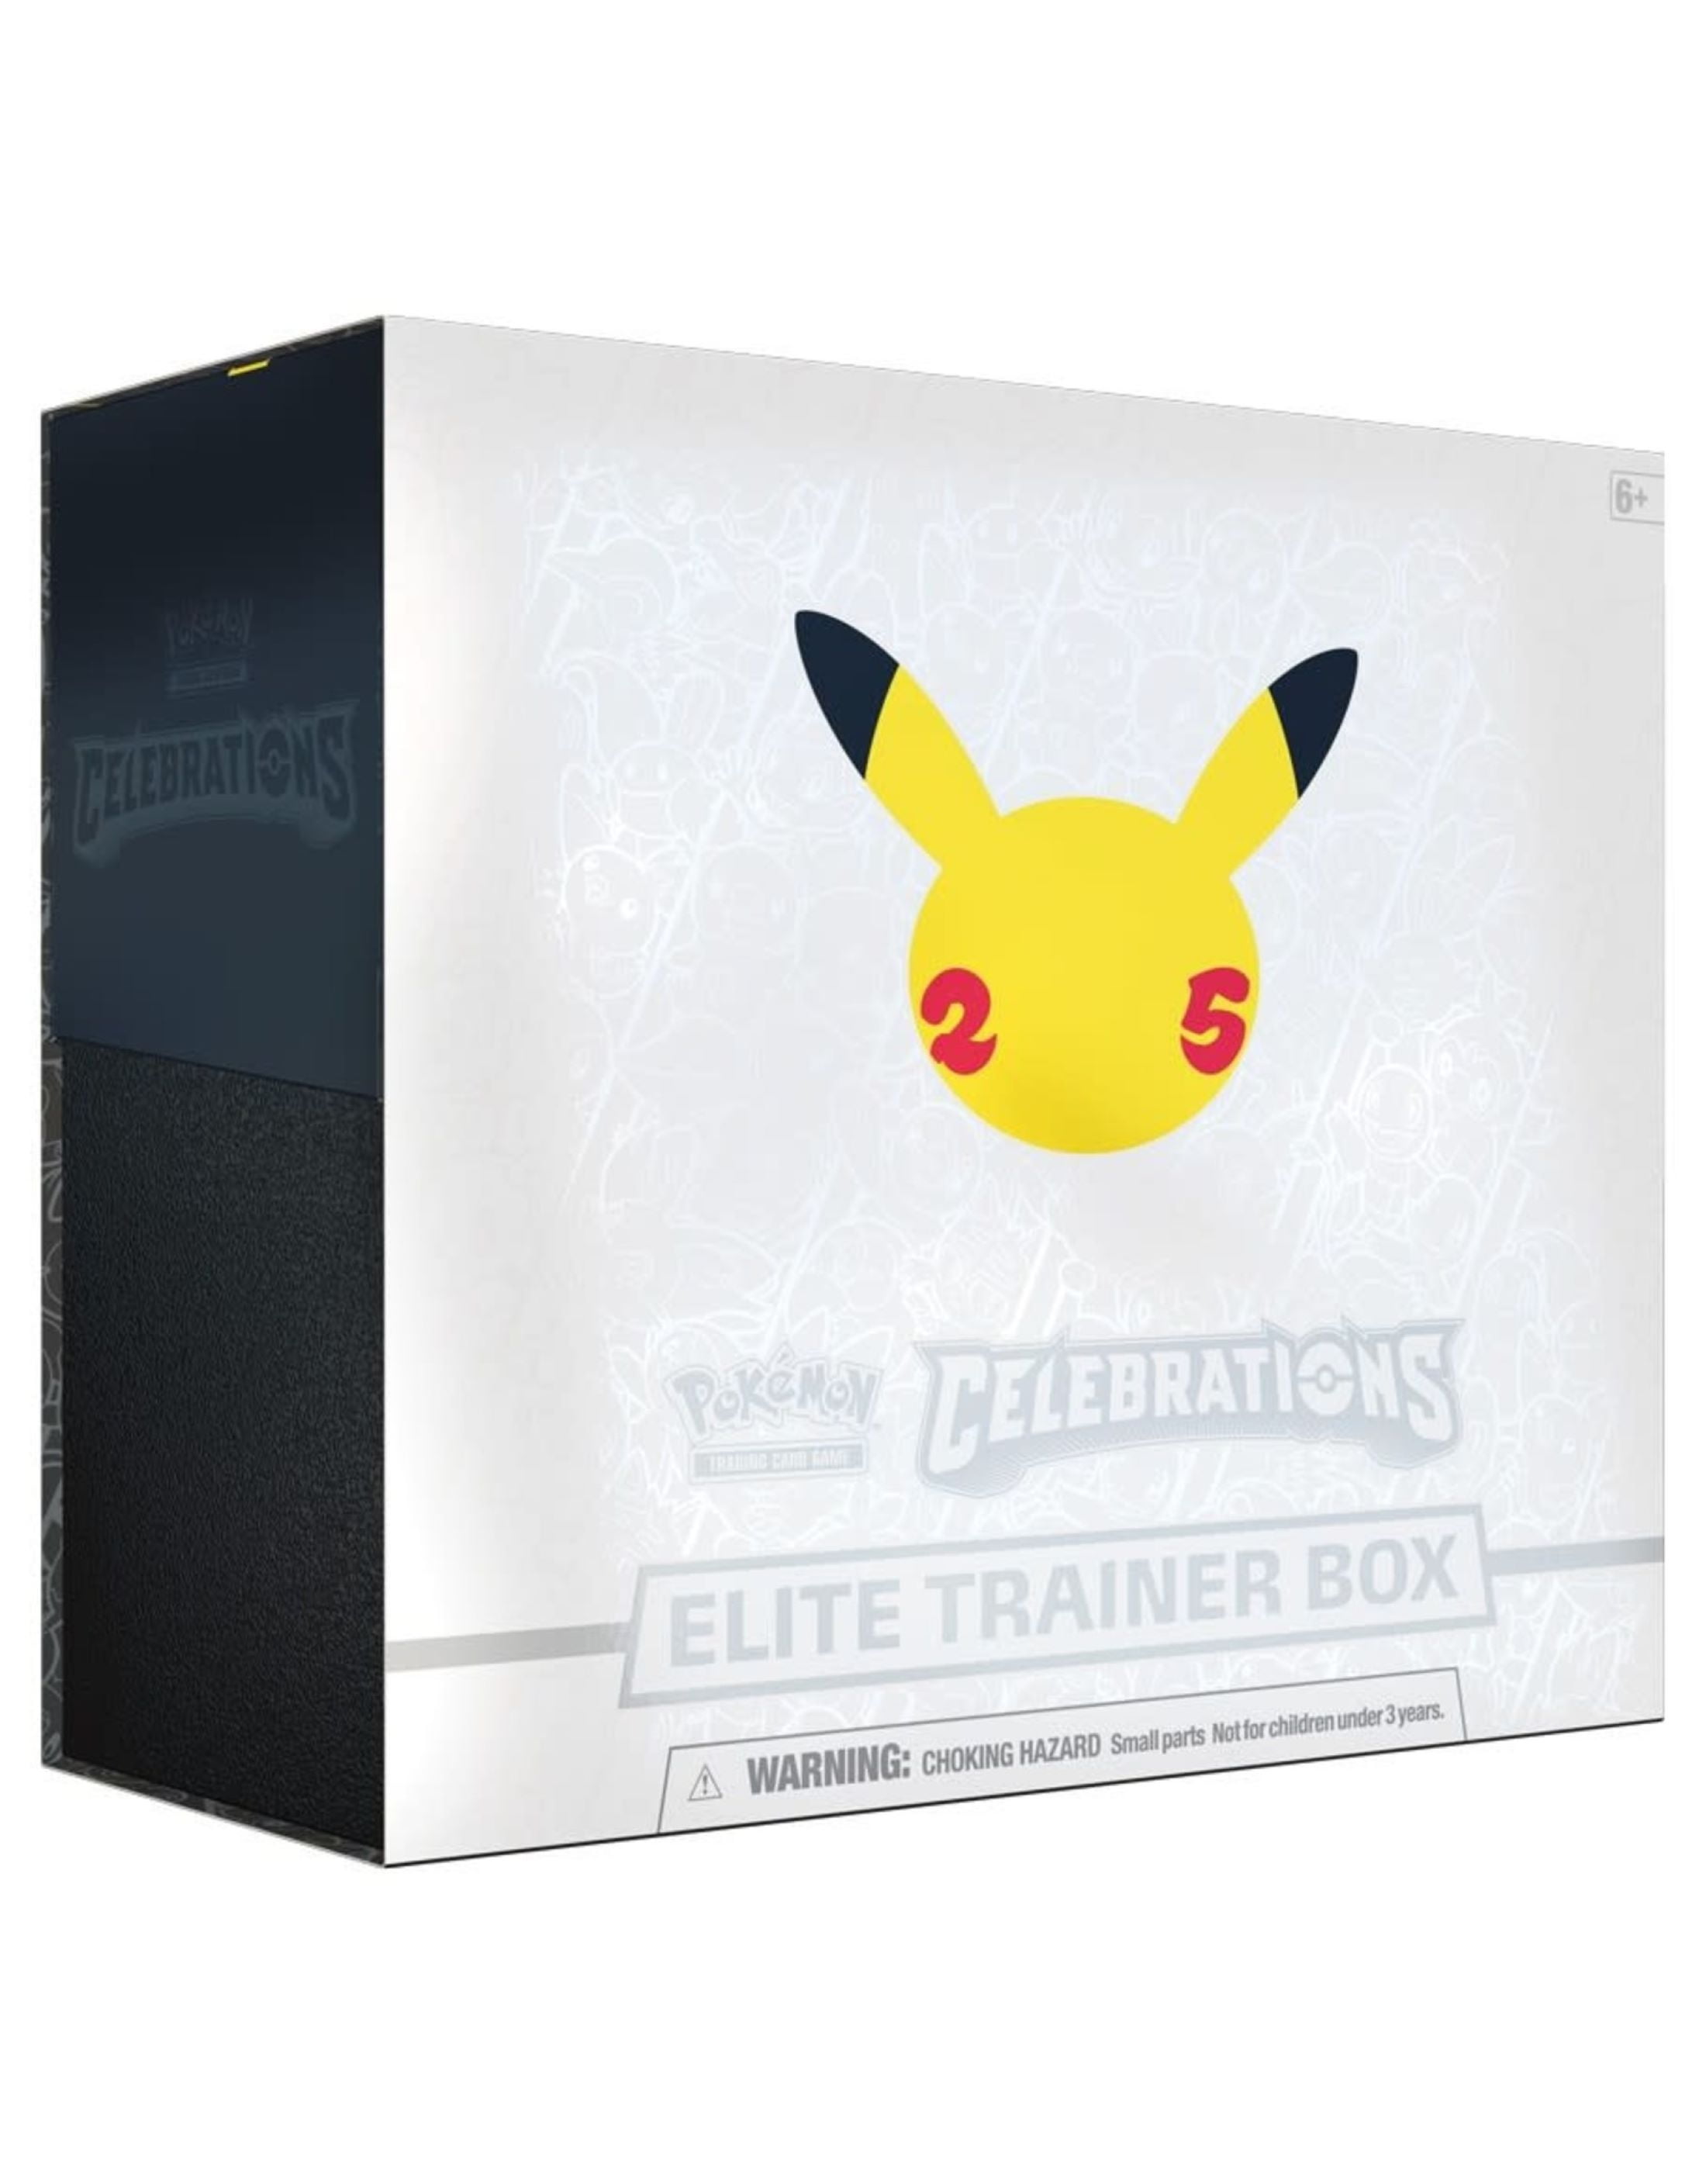 Japanese SWORD & Shield Premium Trainer Box Pokemon US Seller IN HAND 